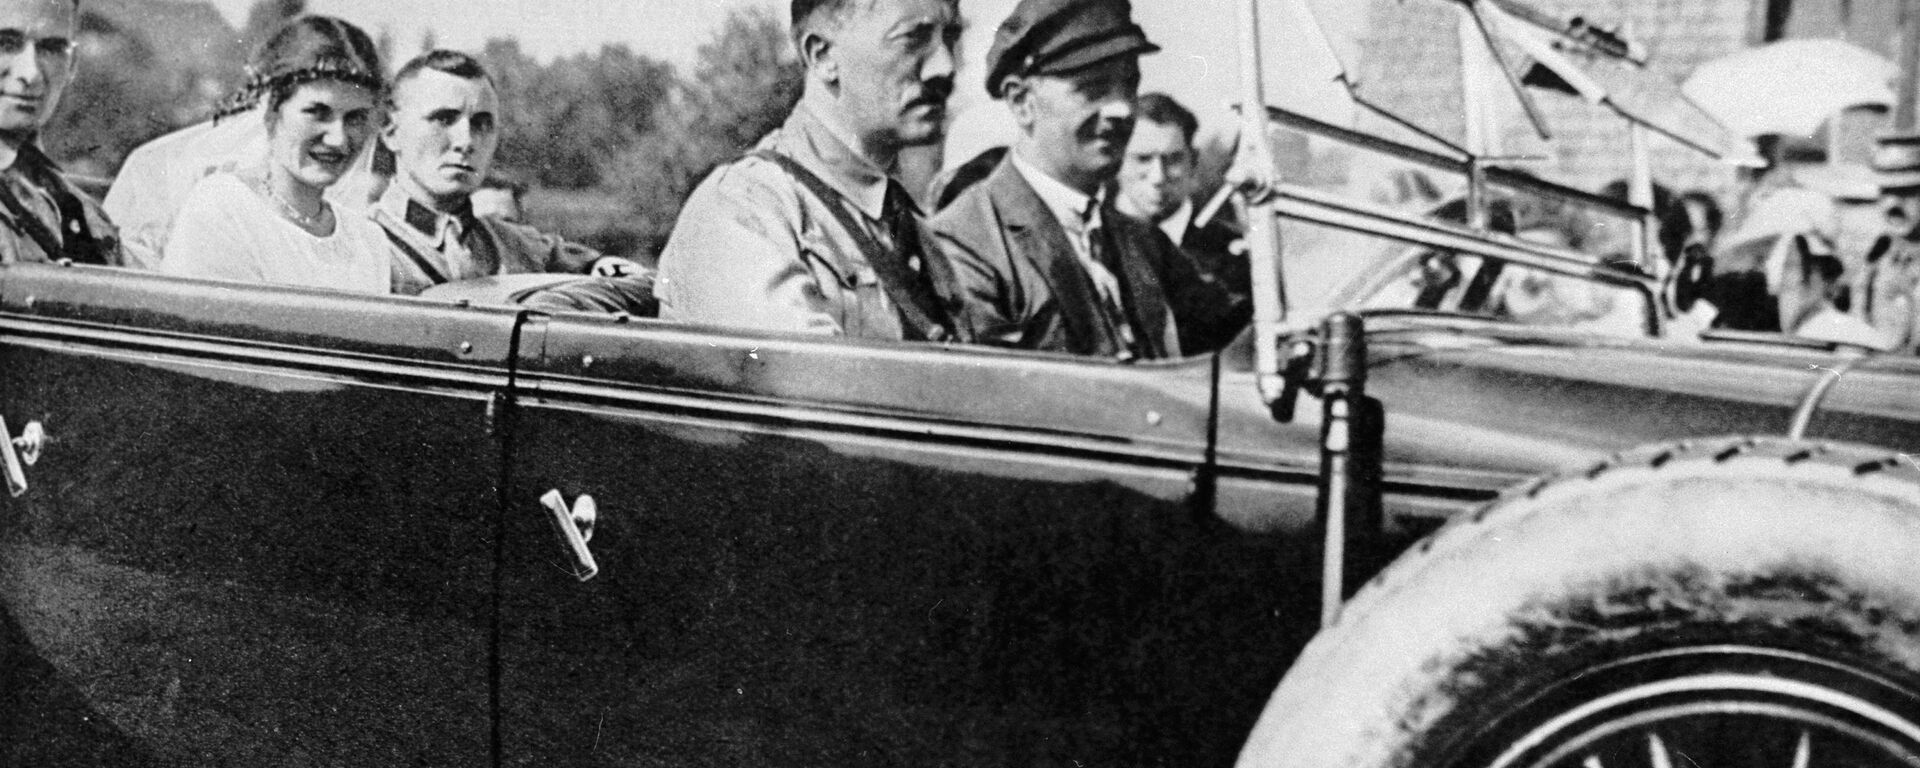 Адолф Хитлер - Sputnik Србија, 1920, 09.05.2018